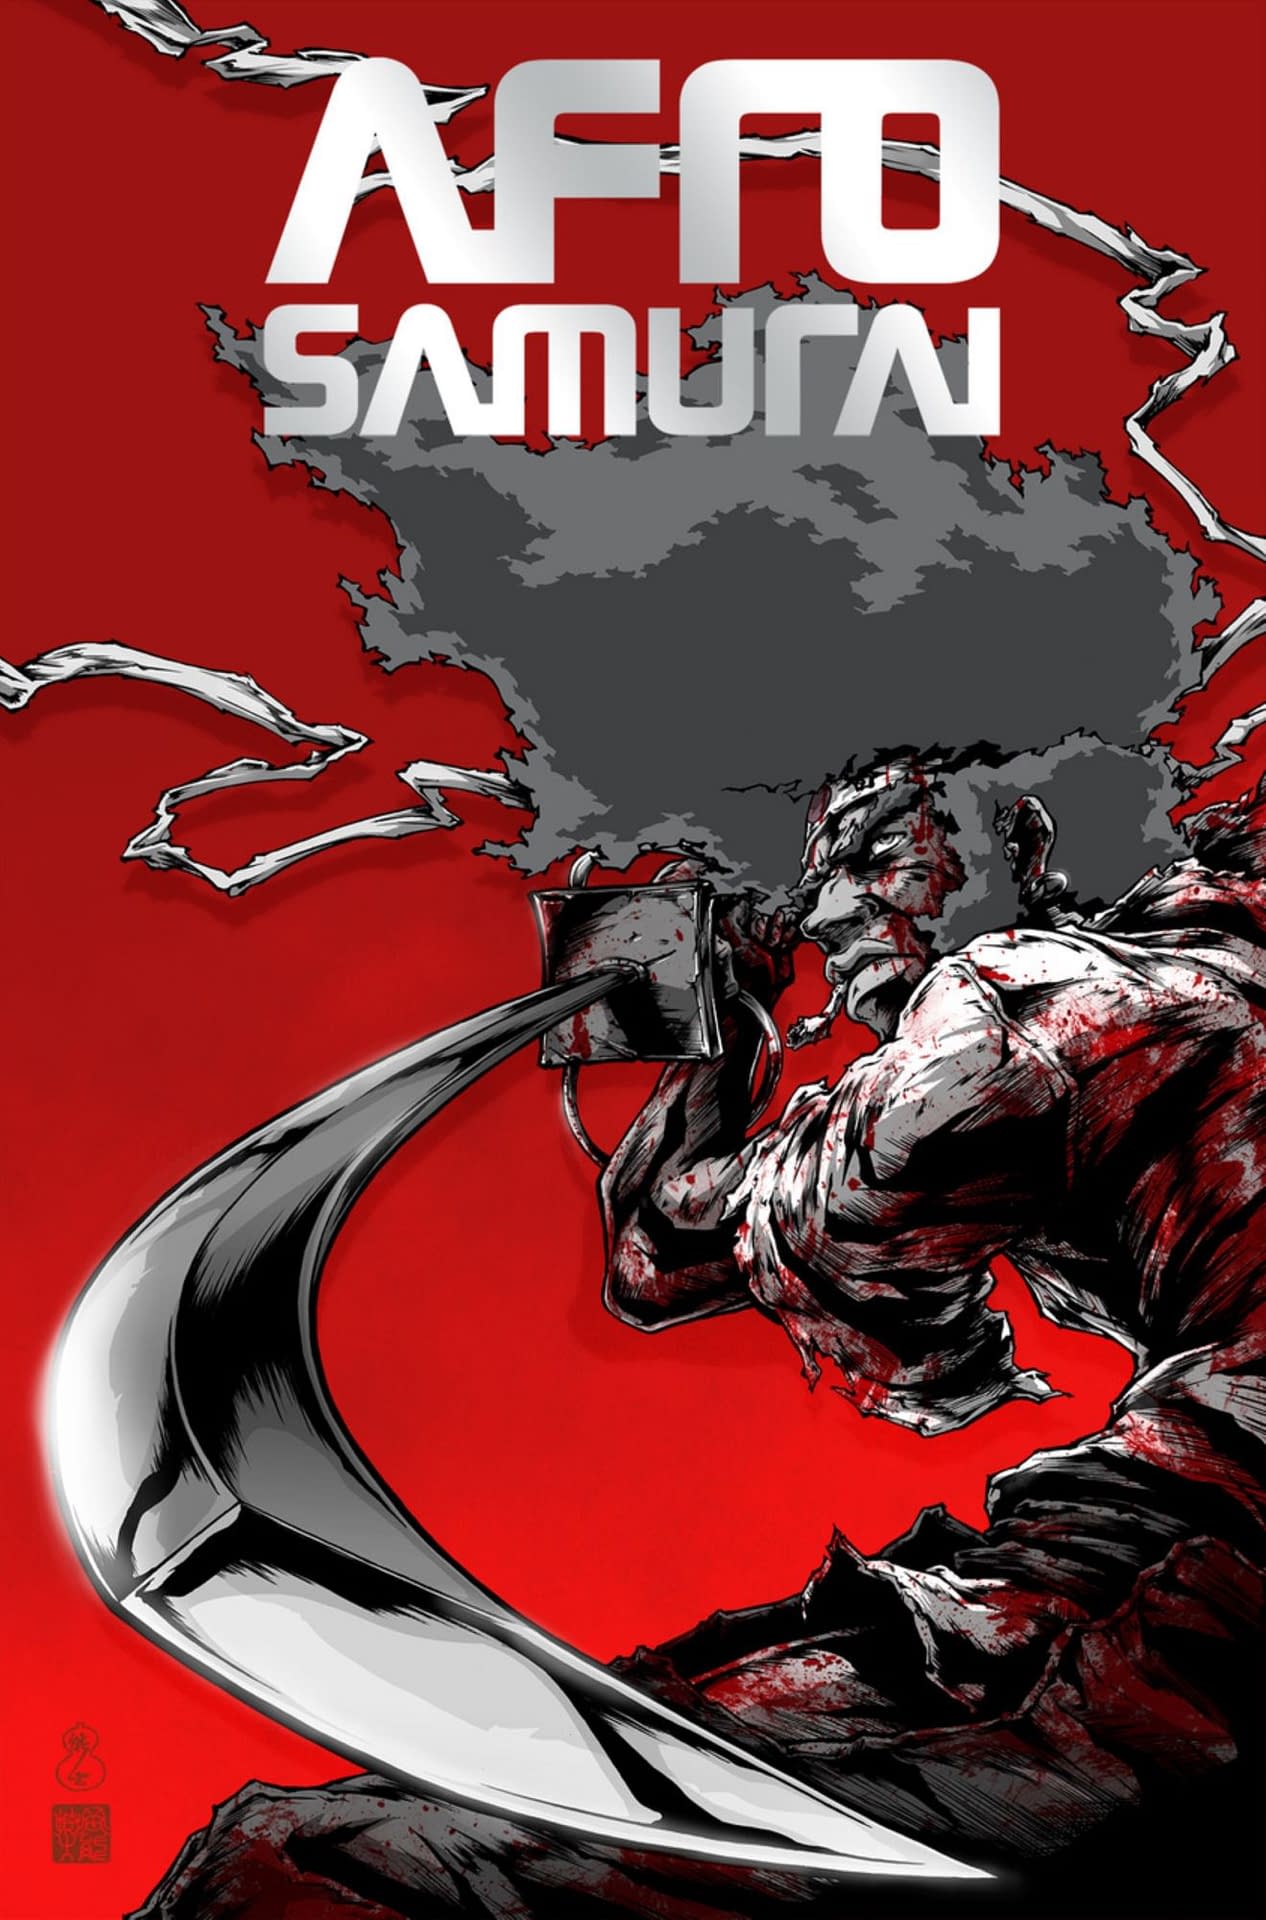 Afro Samurai To Launch Titan Manga Line From Titan Comics